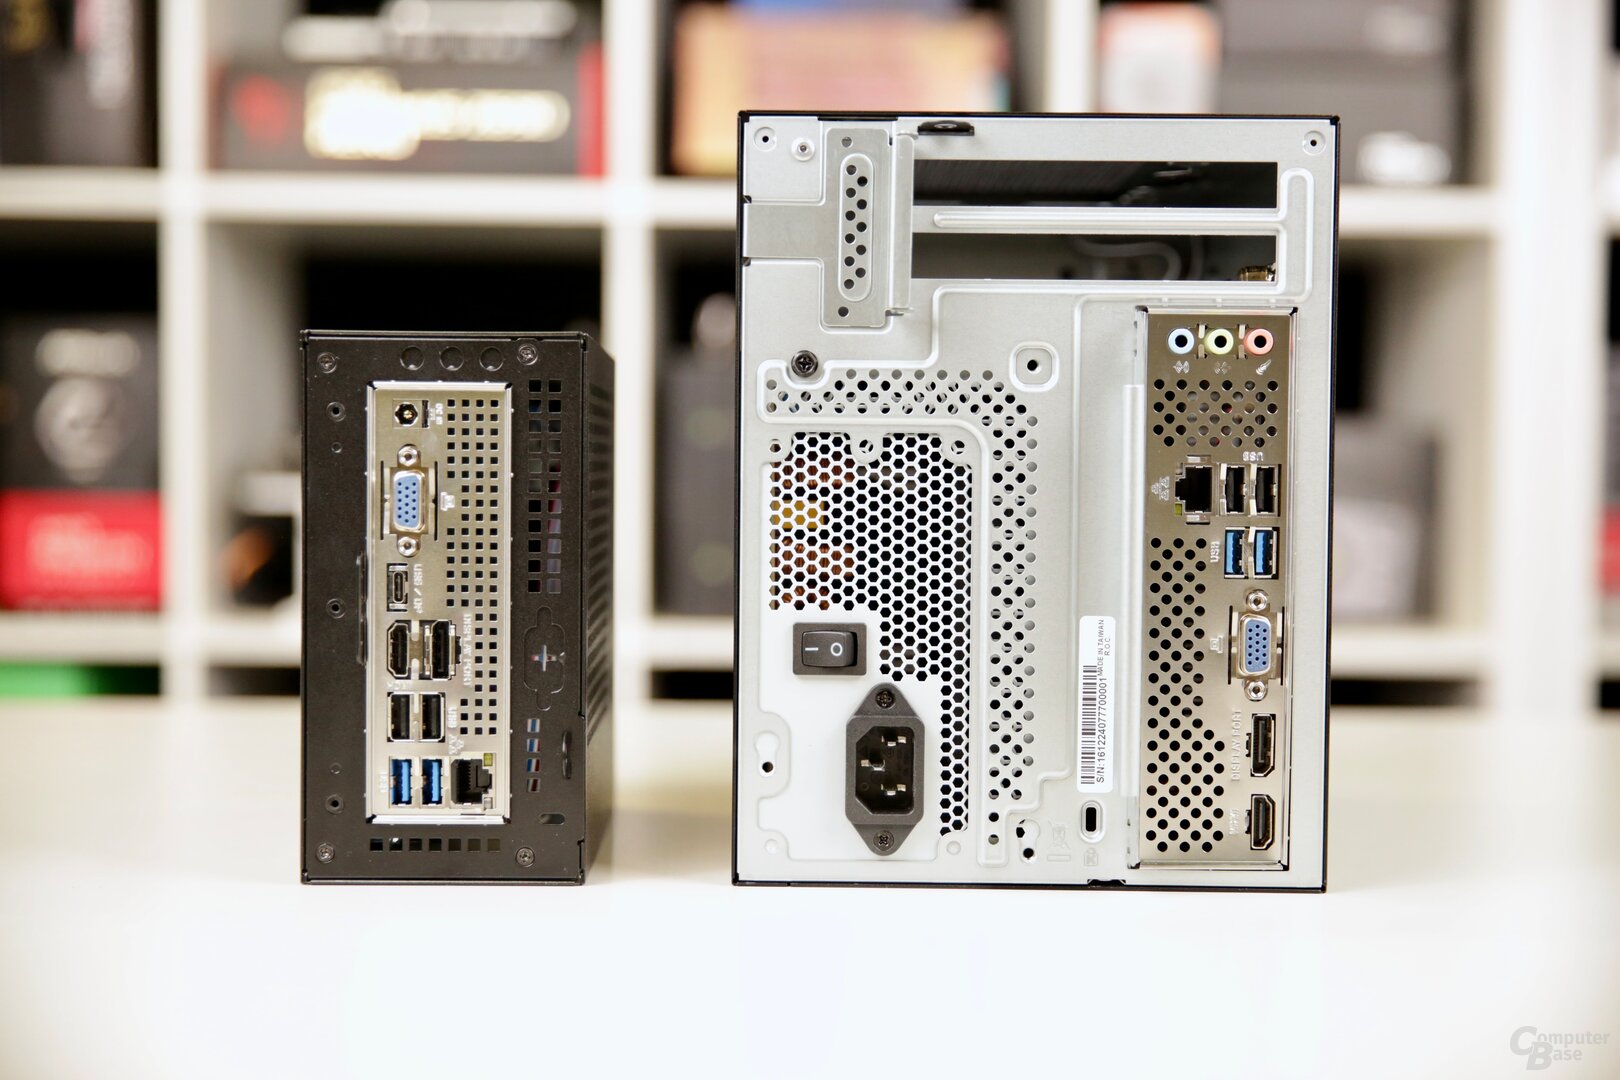 ASRock DeskMeet B660 and DeskMini B660 and their connectors